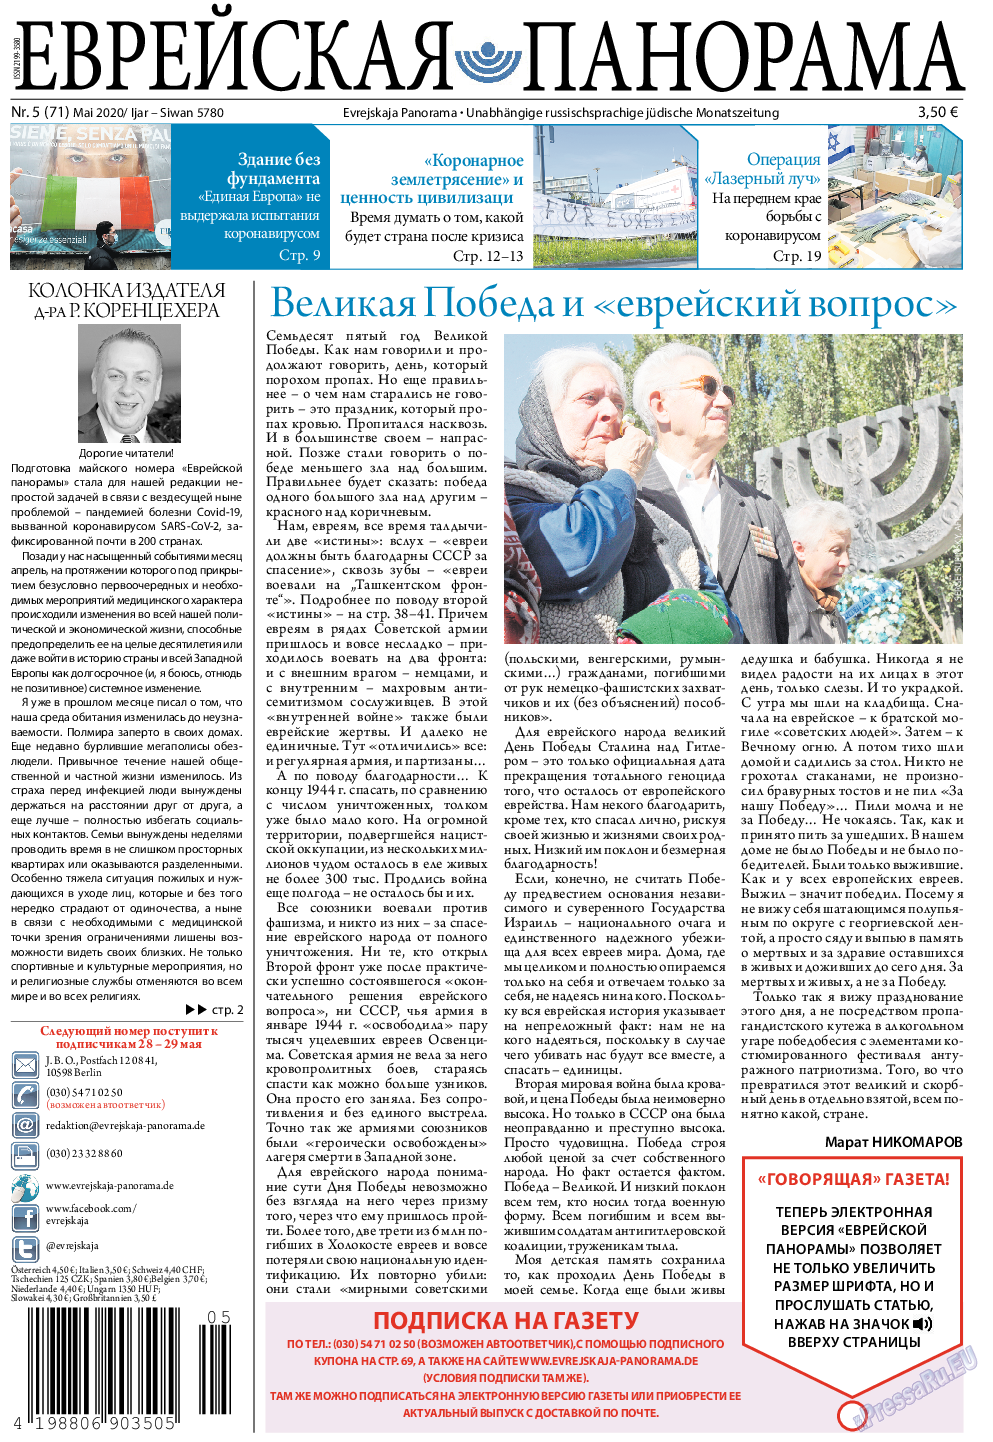 Еврейская панорама, газета. 2020 №5 стр.1